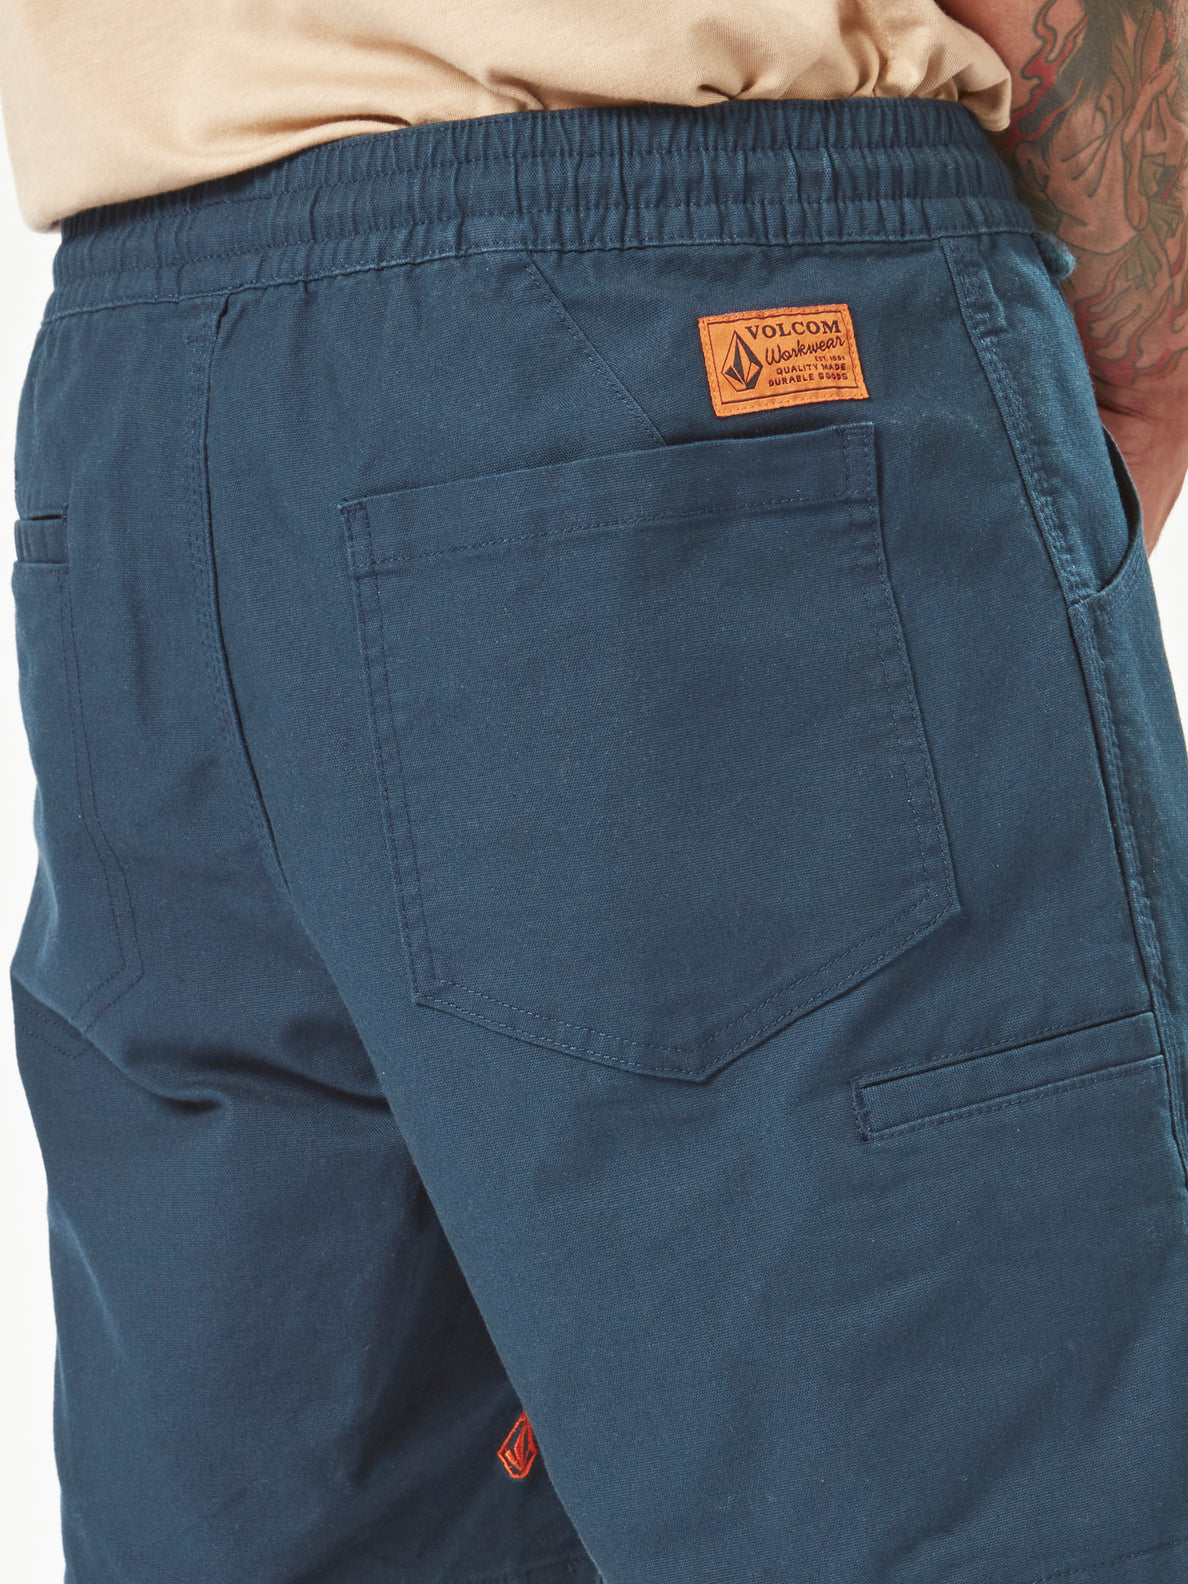 Volcom Workwear Caliper Elastic Waist Shorts - Navy (A1002005_NVY) [5]